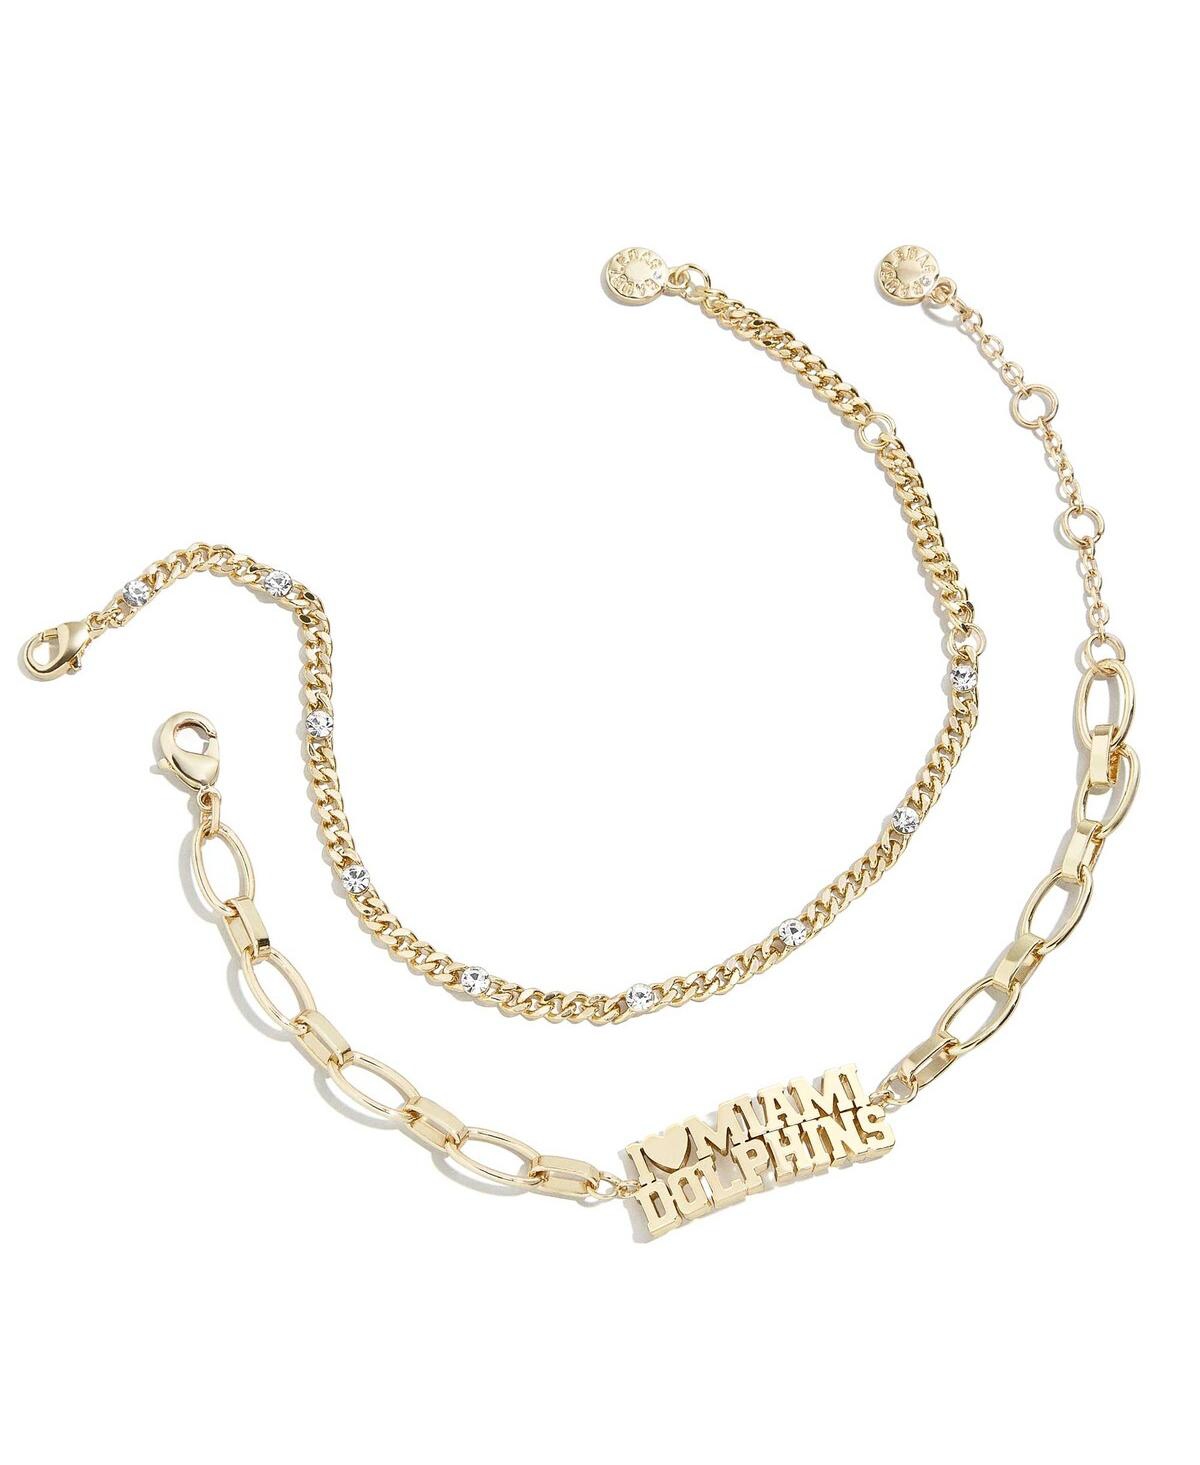 Shop Wear By Erin Andrews Women's  X Baublebar Gold Miami Dolphins Linear Bracelet Set